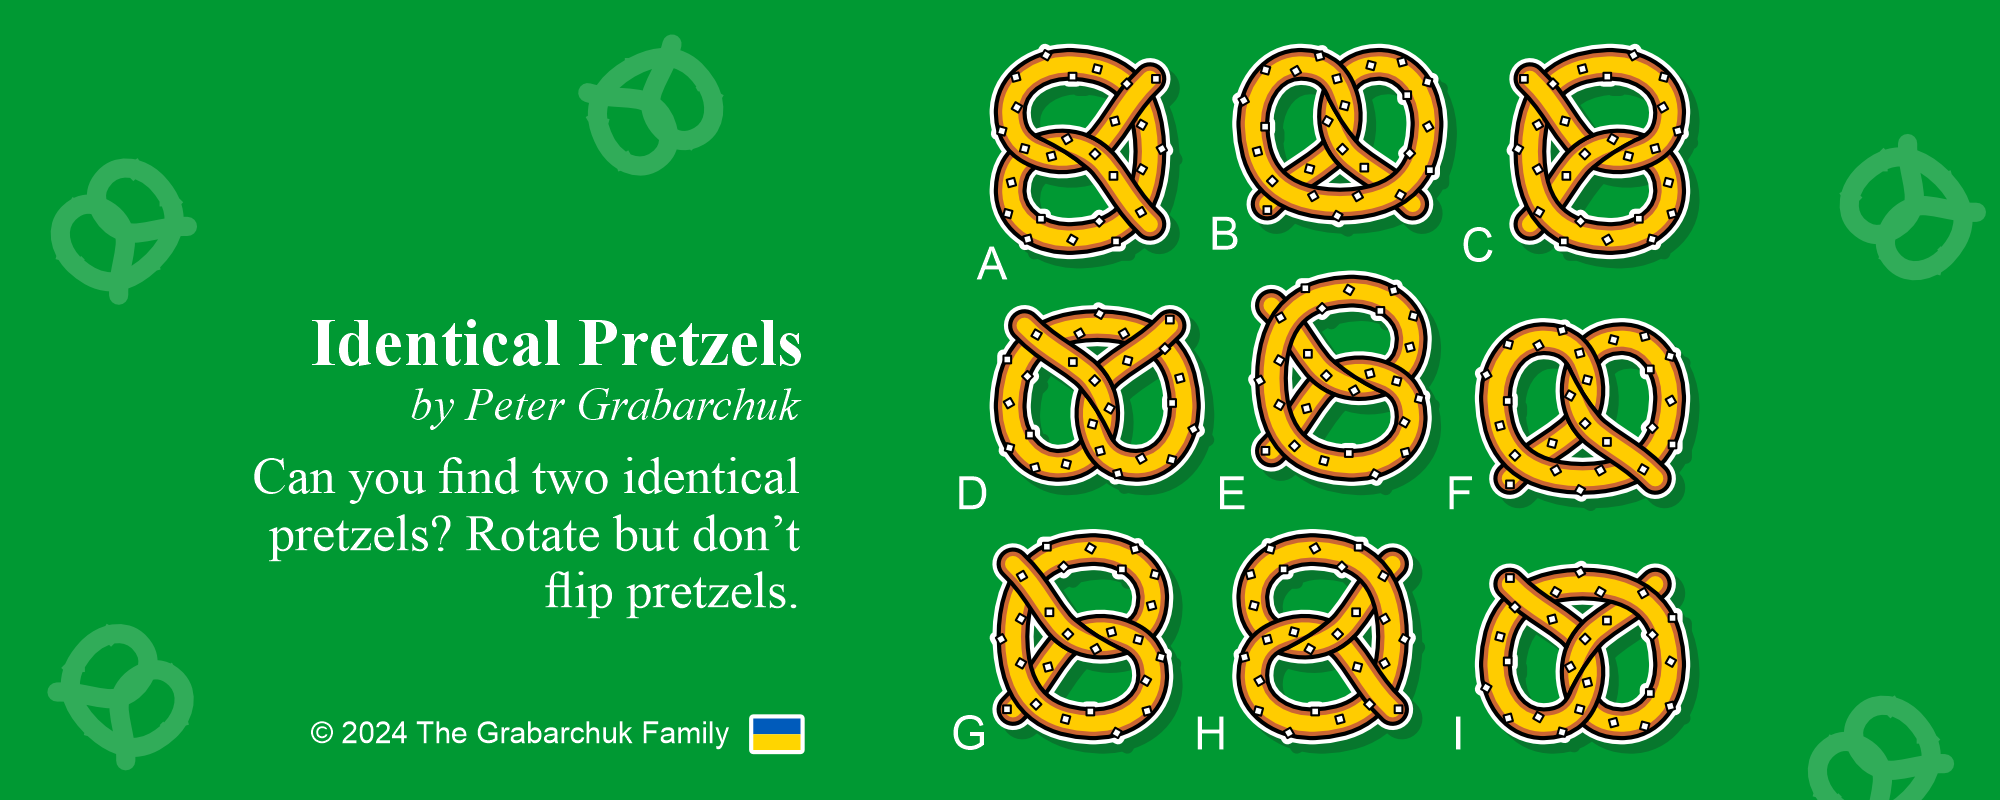 Identical Pretzels by Peter Grabarchuk